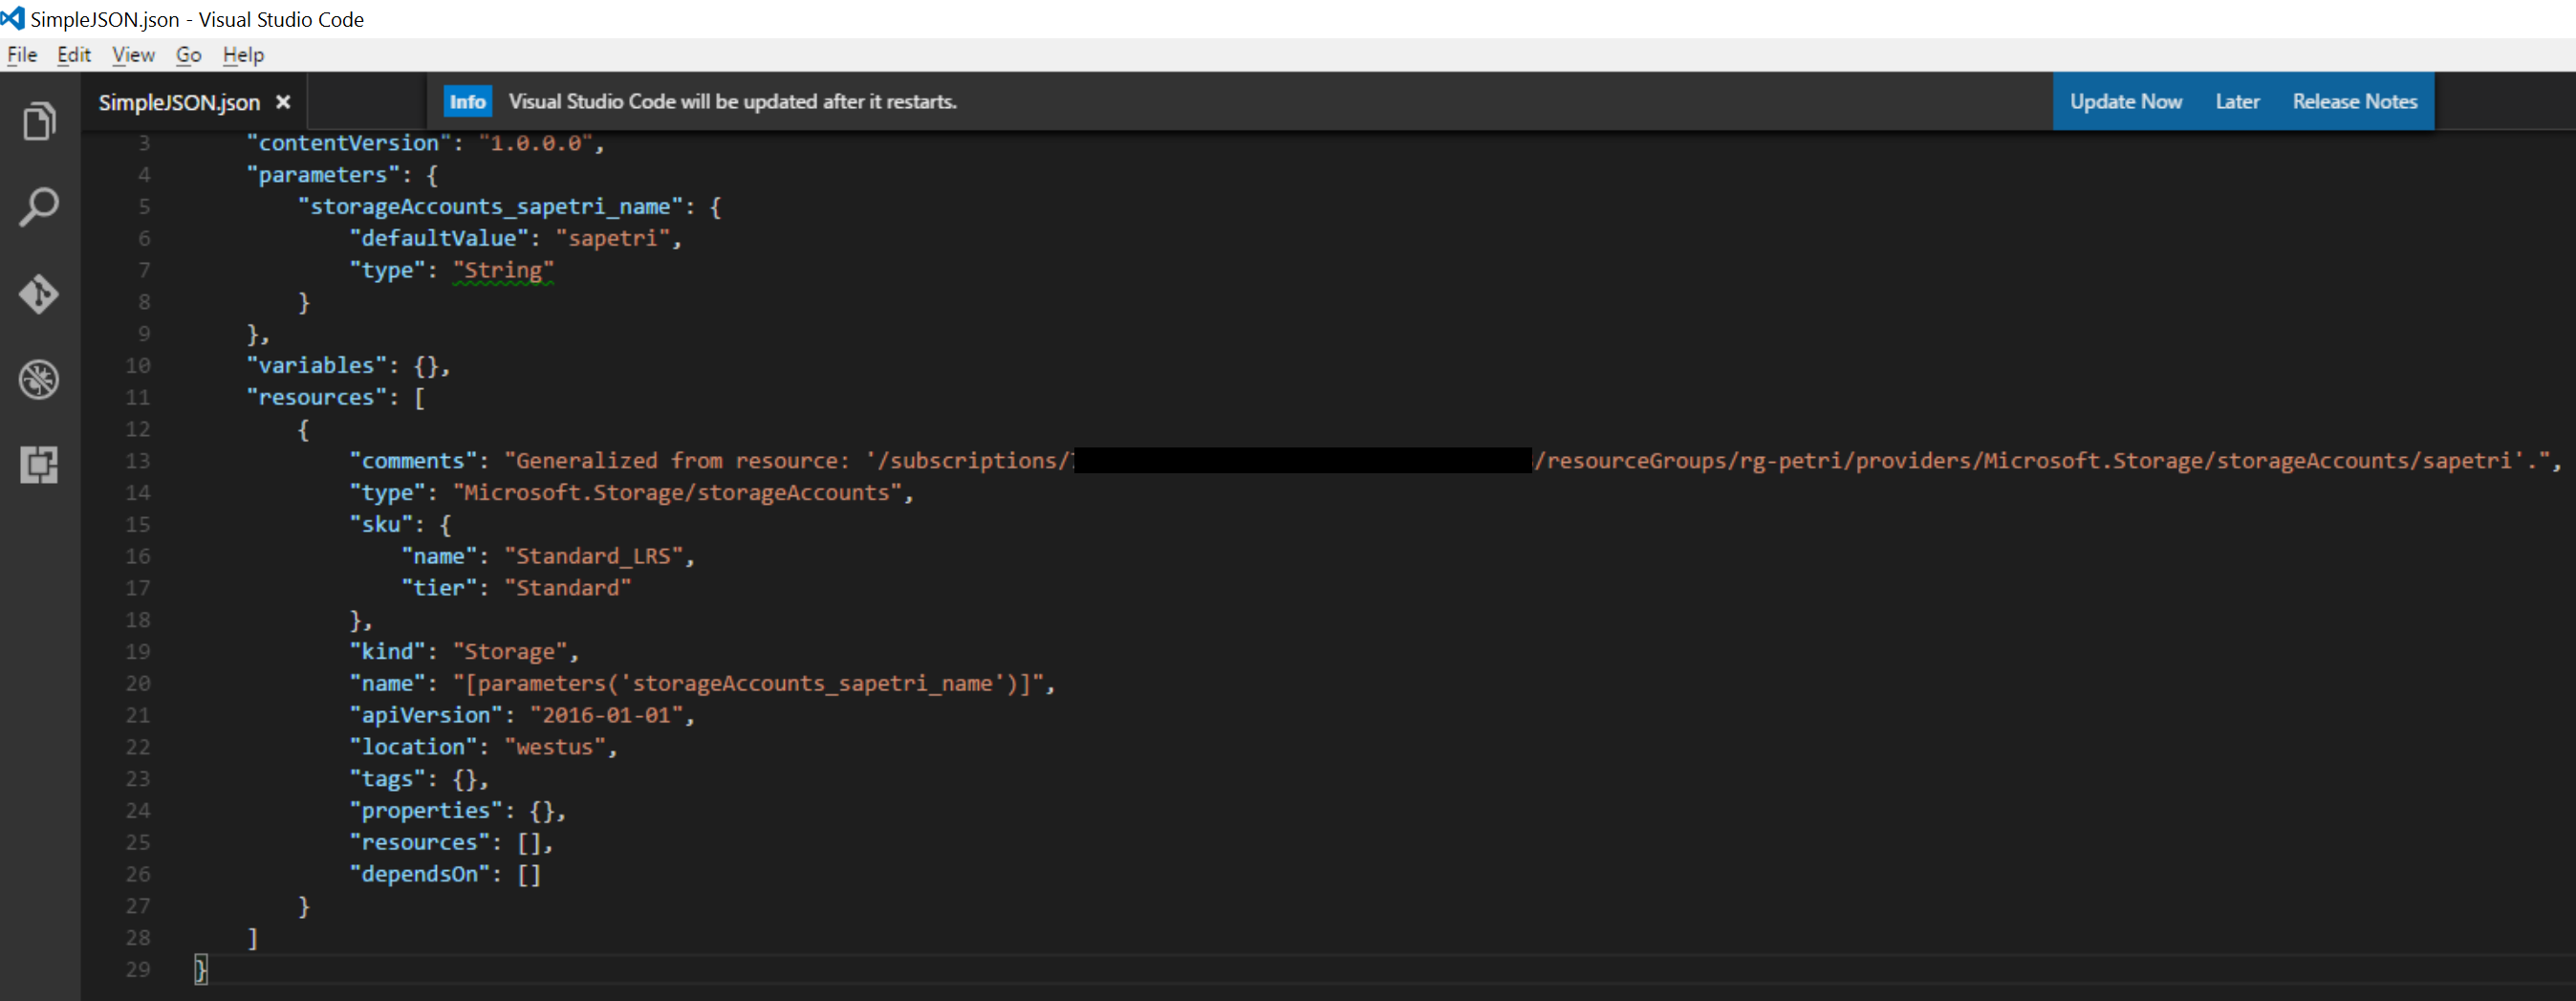 The default JSON in VS Code [Image Credit: Aidan Finn]